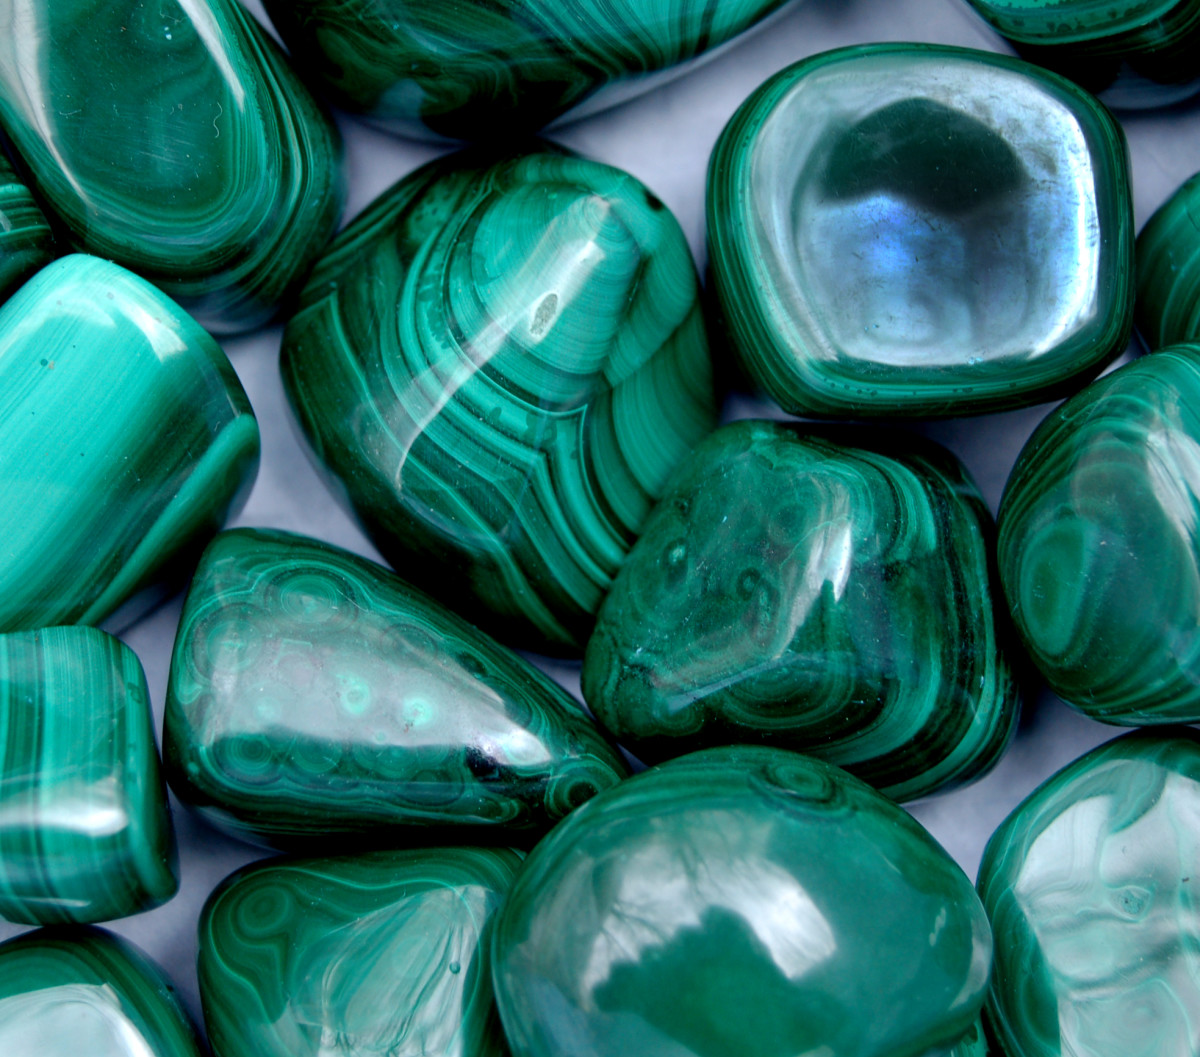 Emerald stones